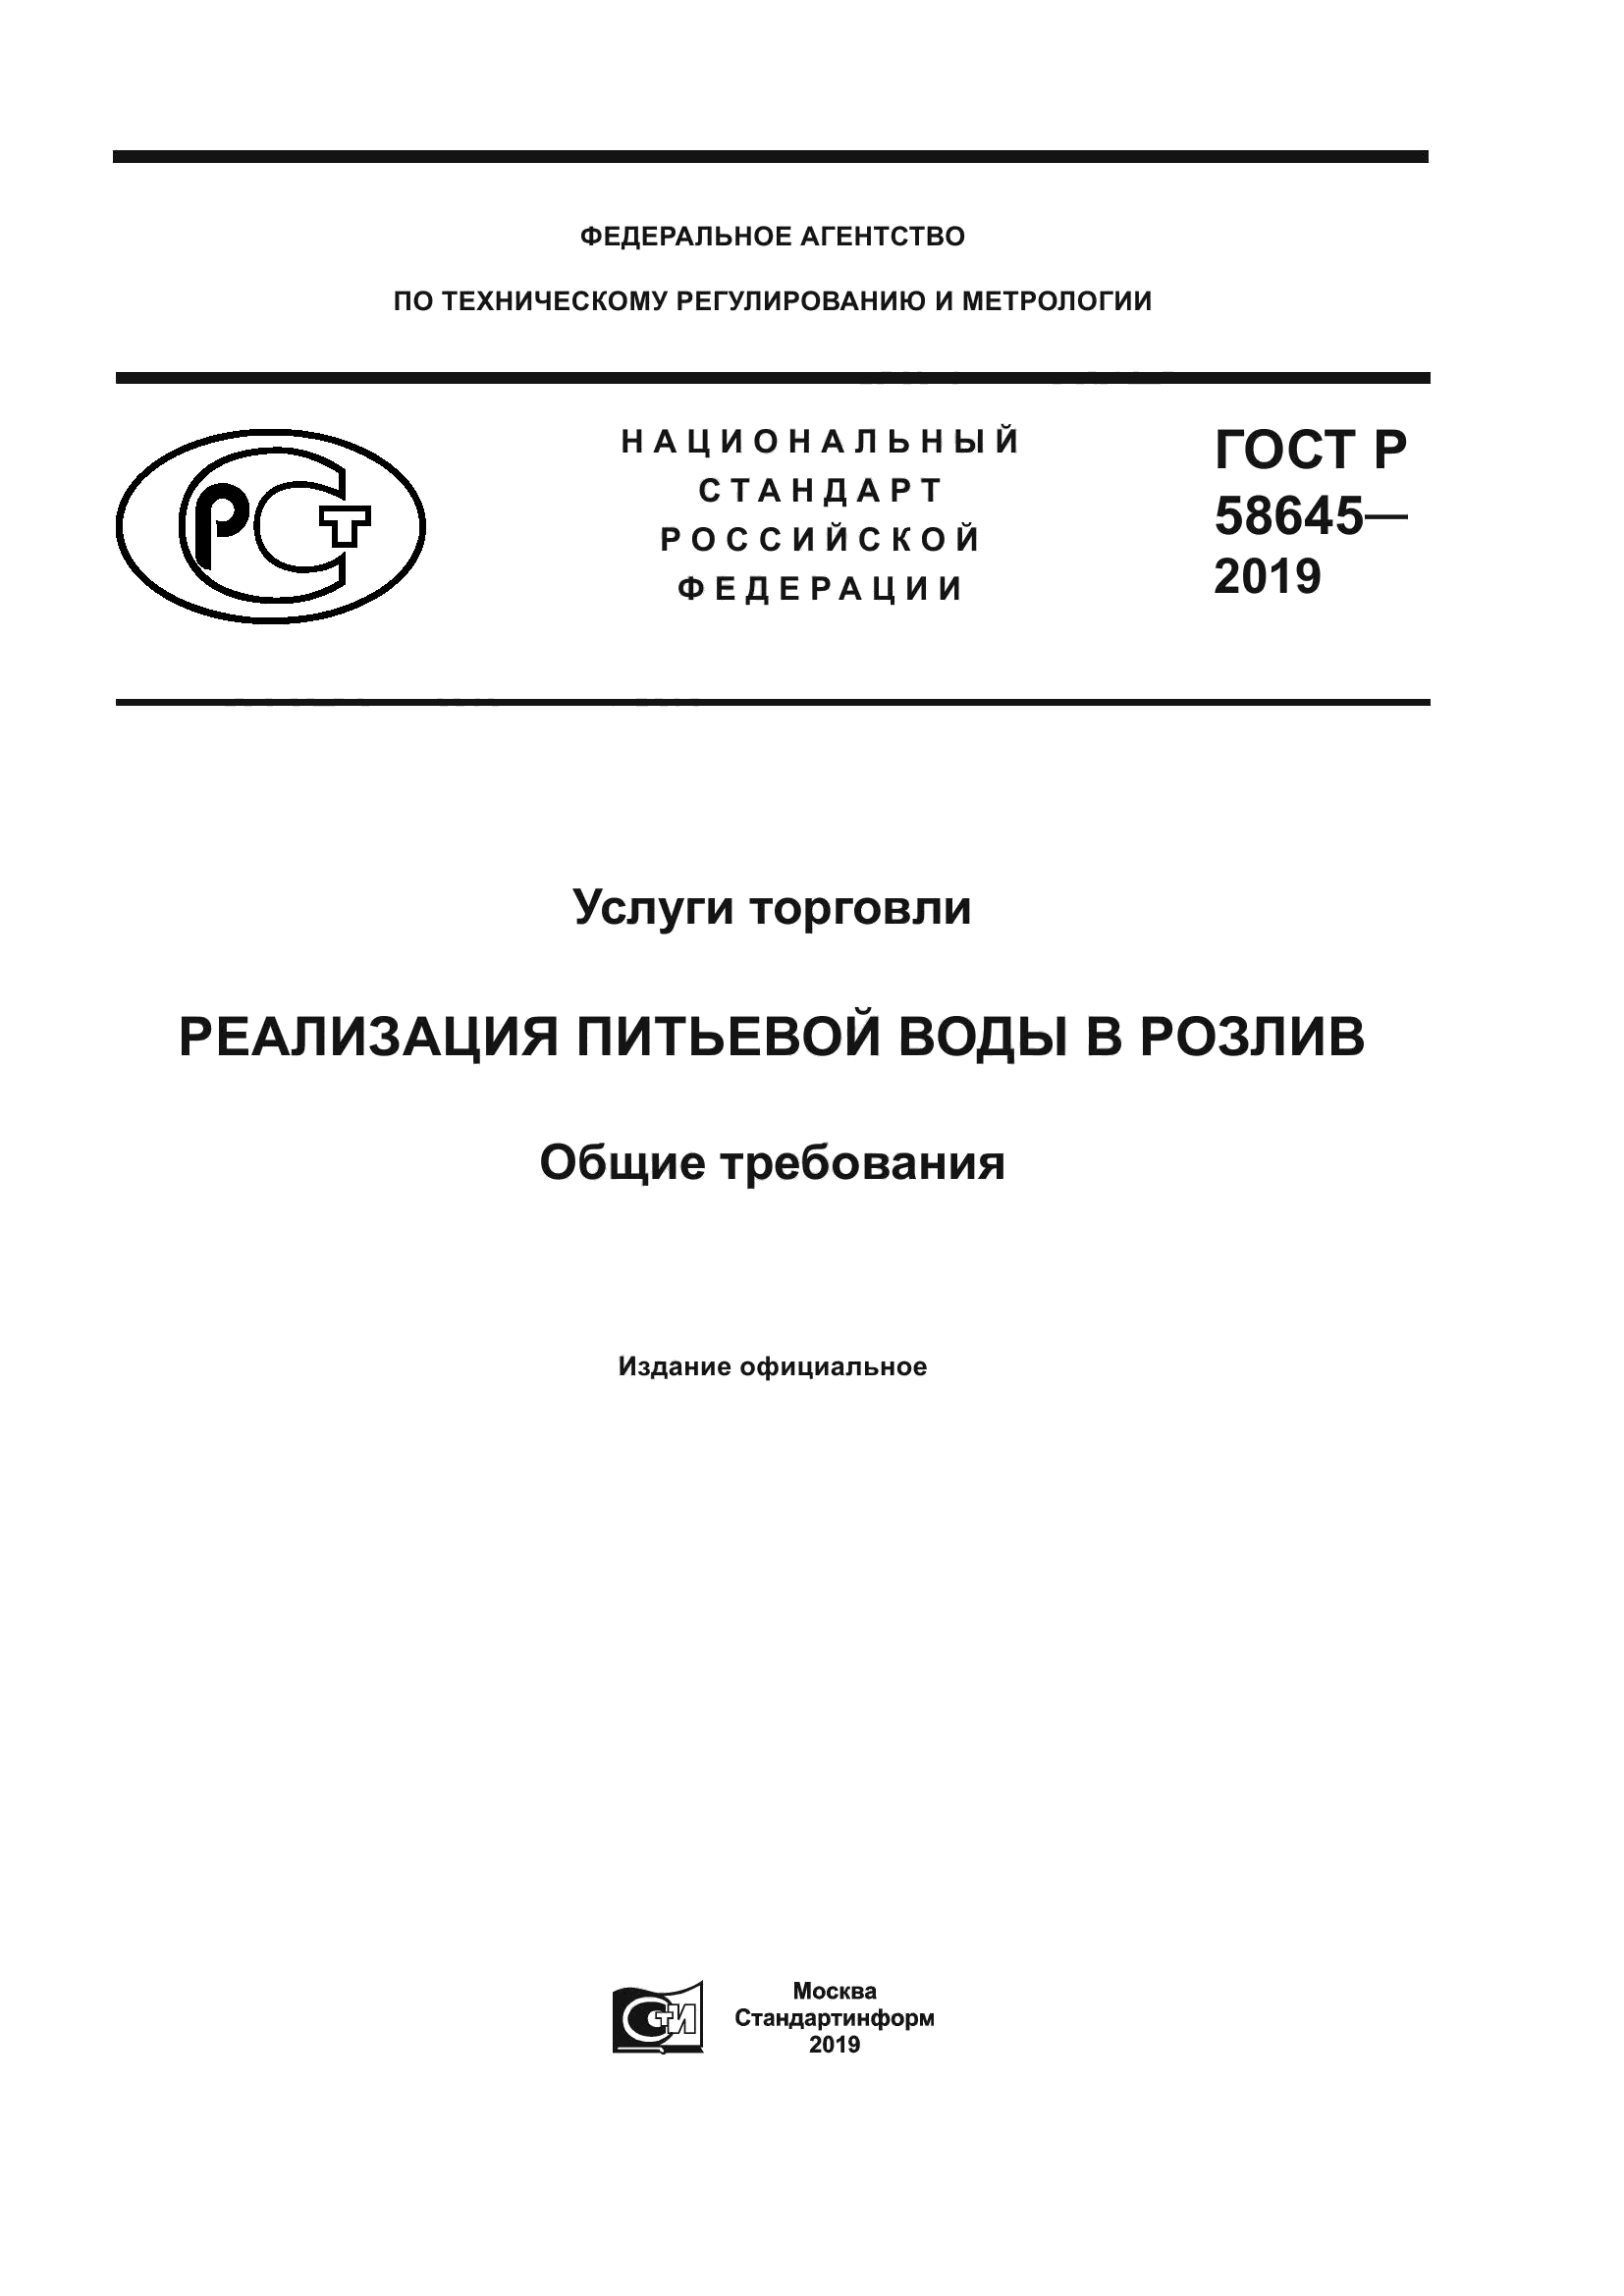 ГОСТ Р 58645-2019